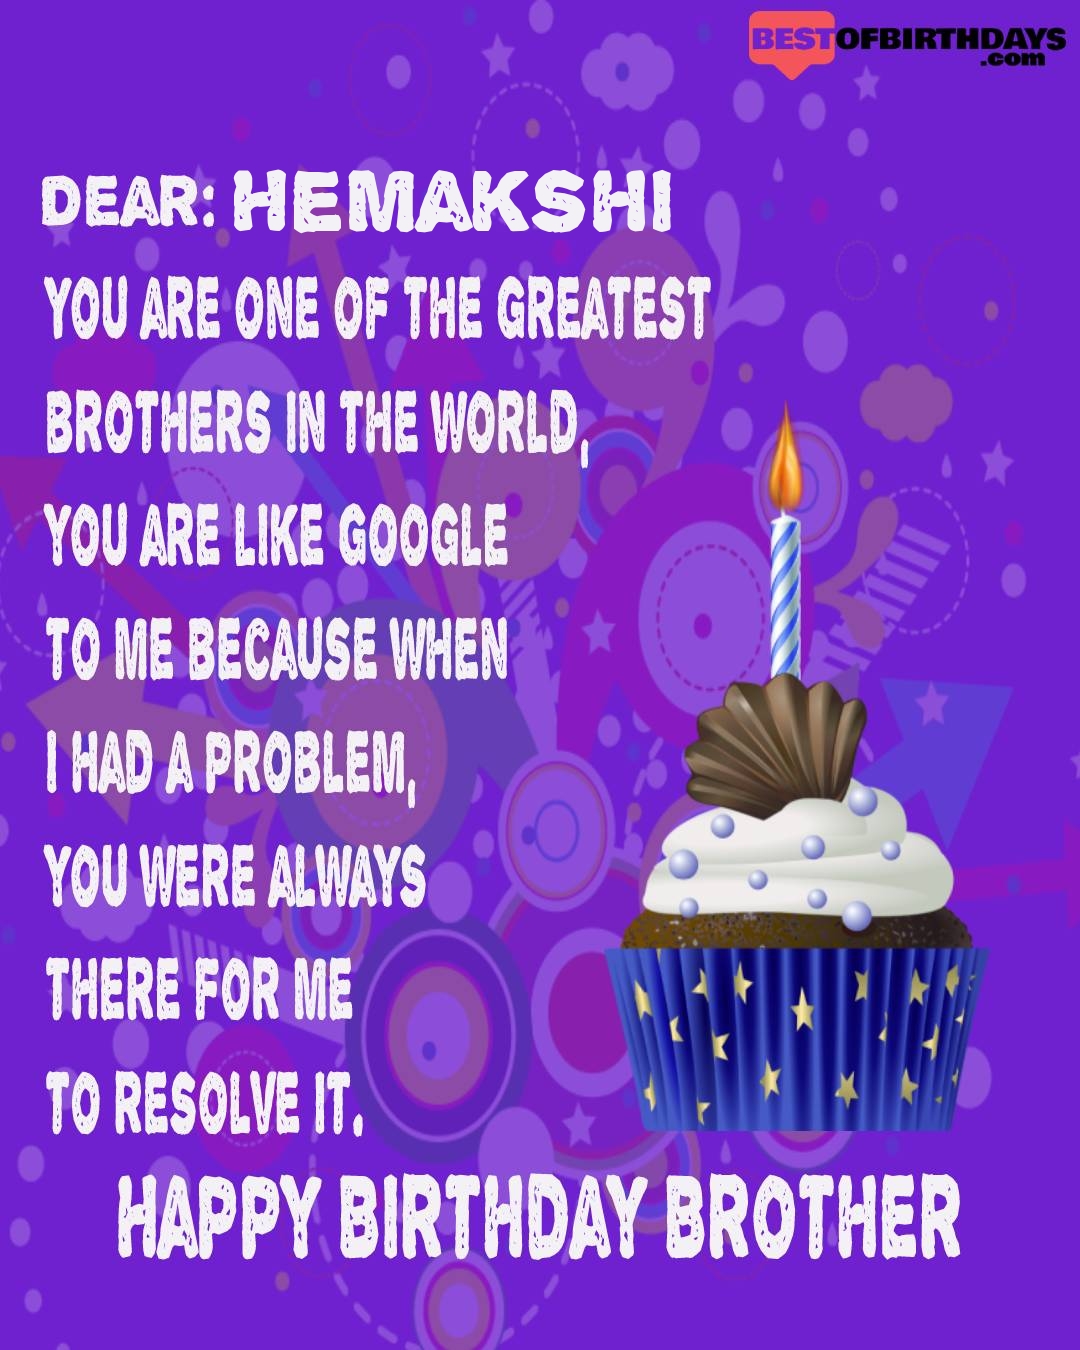 Happy birthday hemakshi bhai brother bro